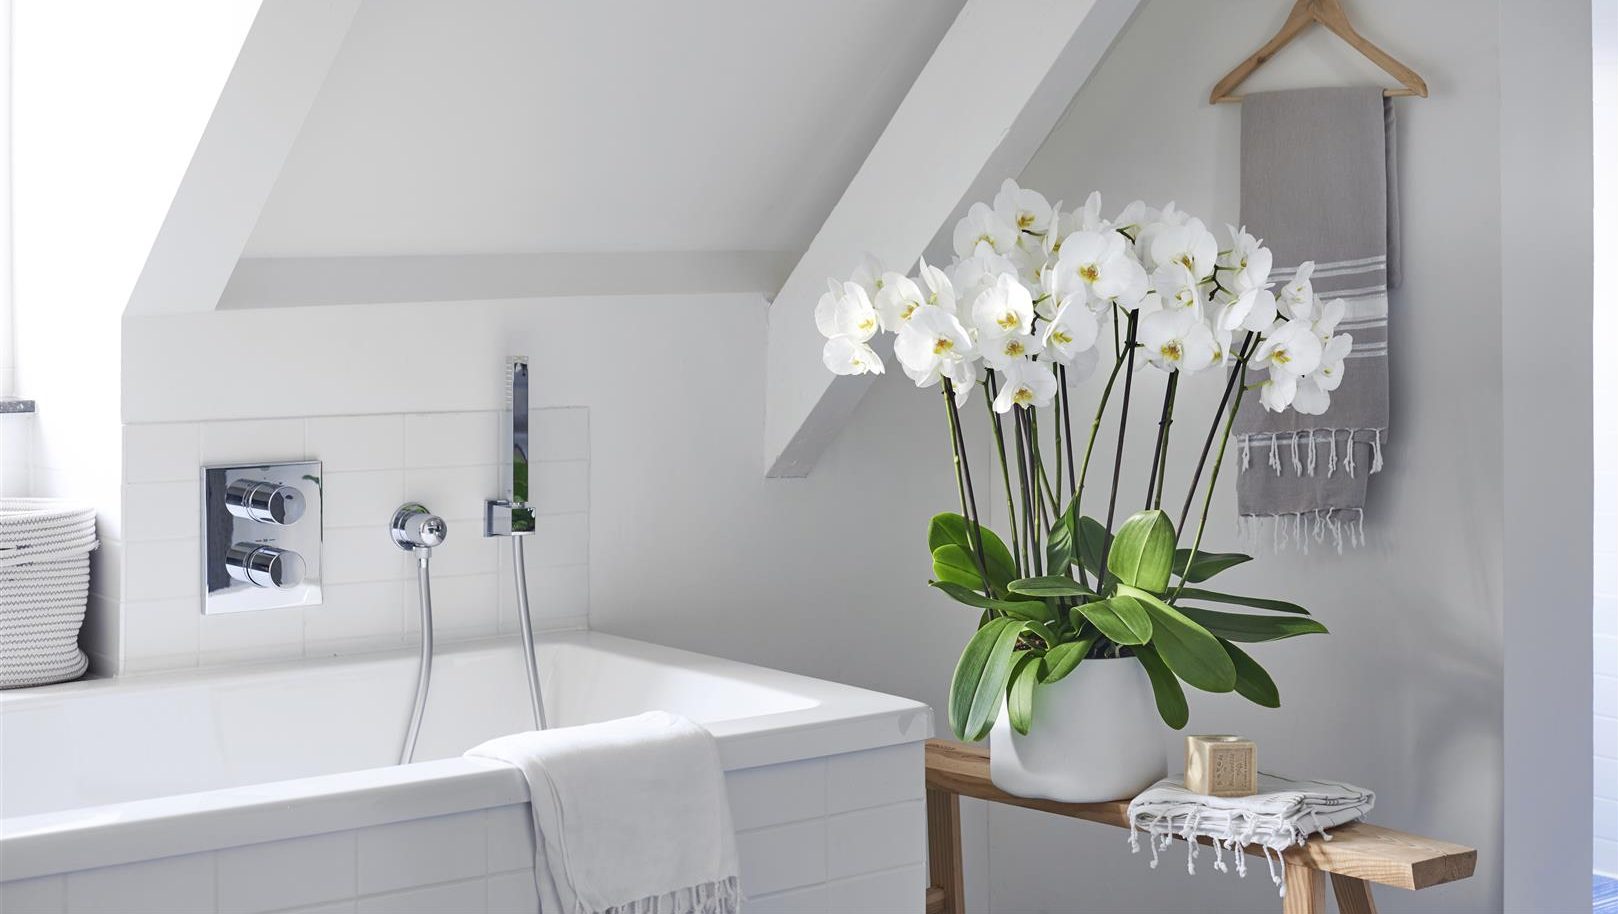 Decorative bathroom plants - a charming orchid